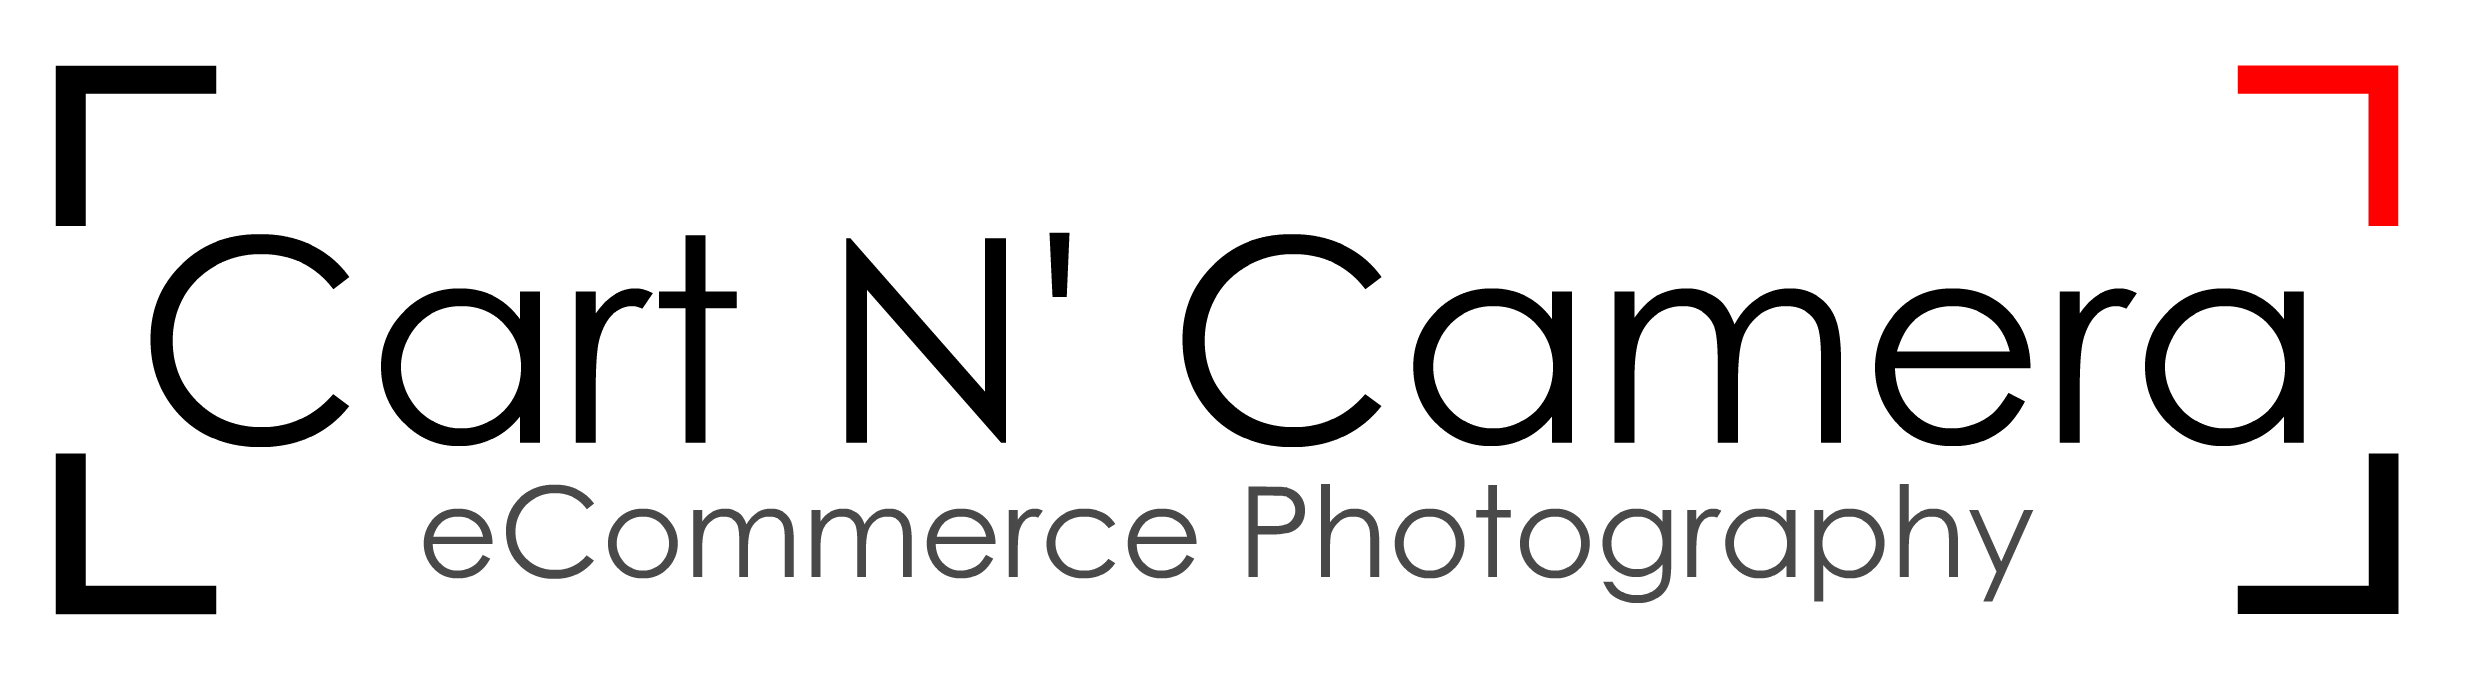 Company Logo For Cart N Camera - Ecommerce Photography'